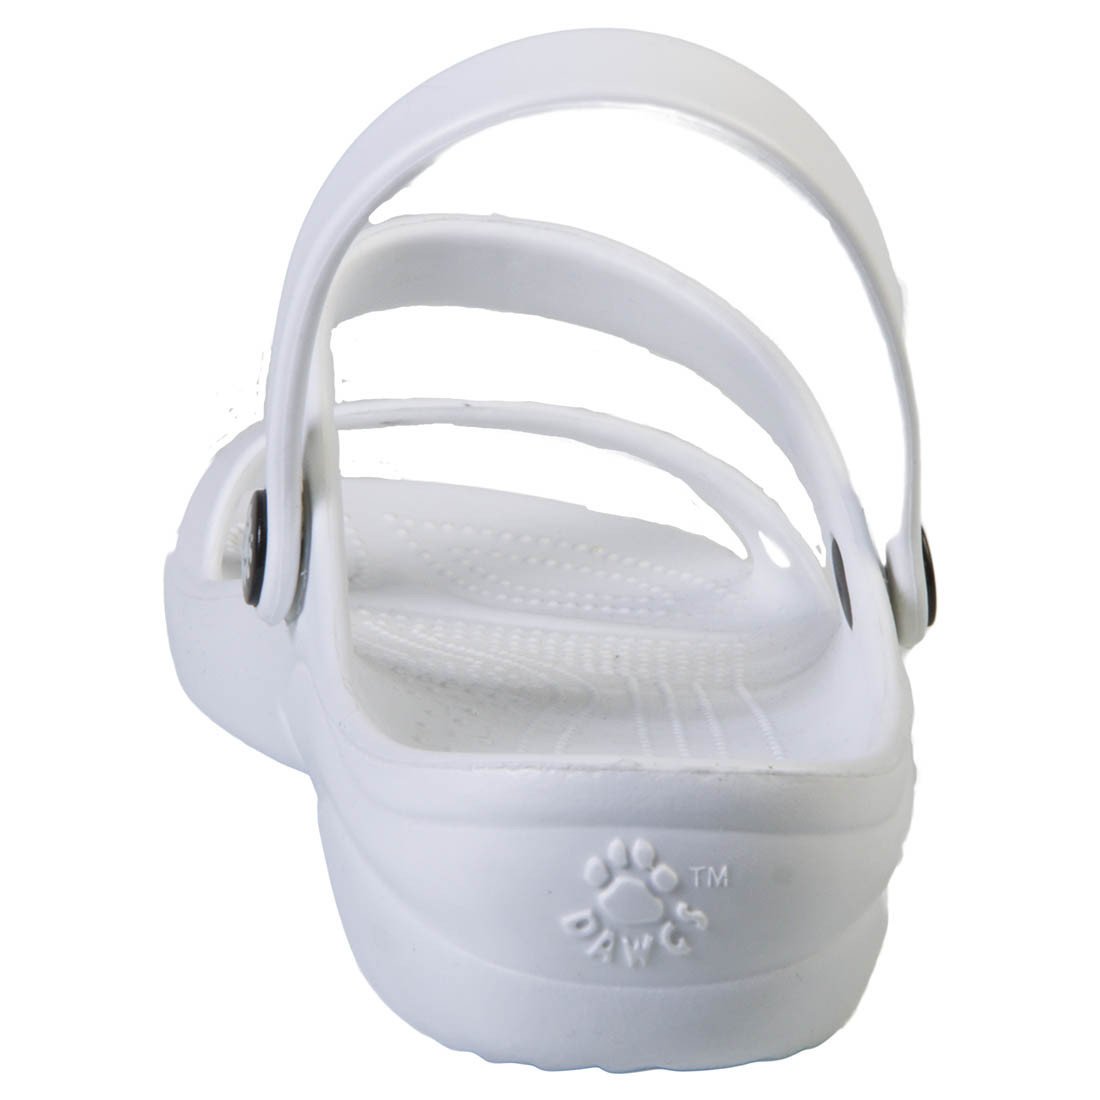 Women's 3-Strap Sandals - White by DAWGS USA